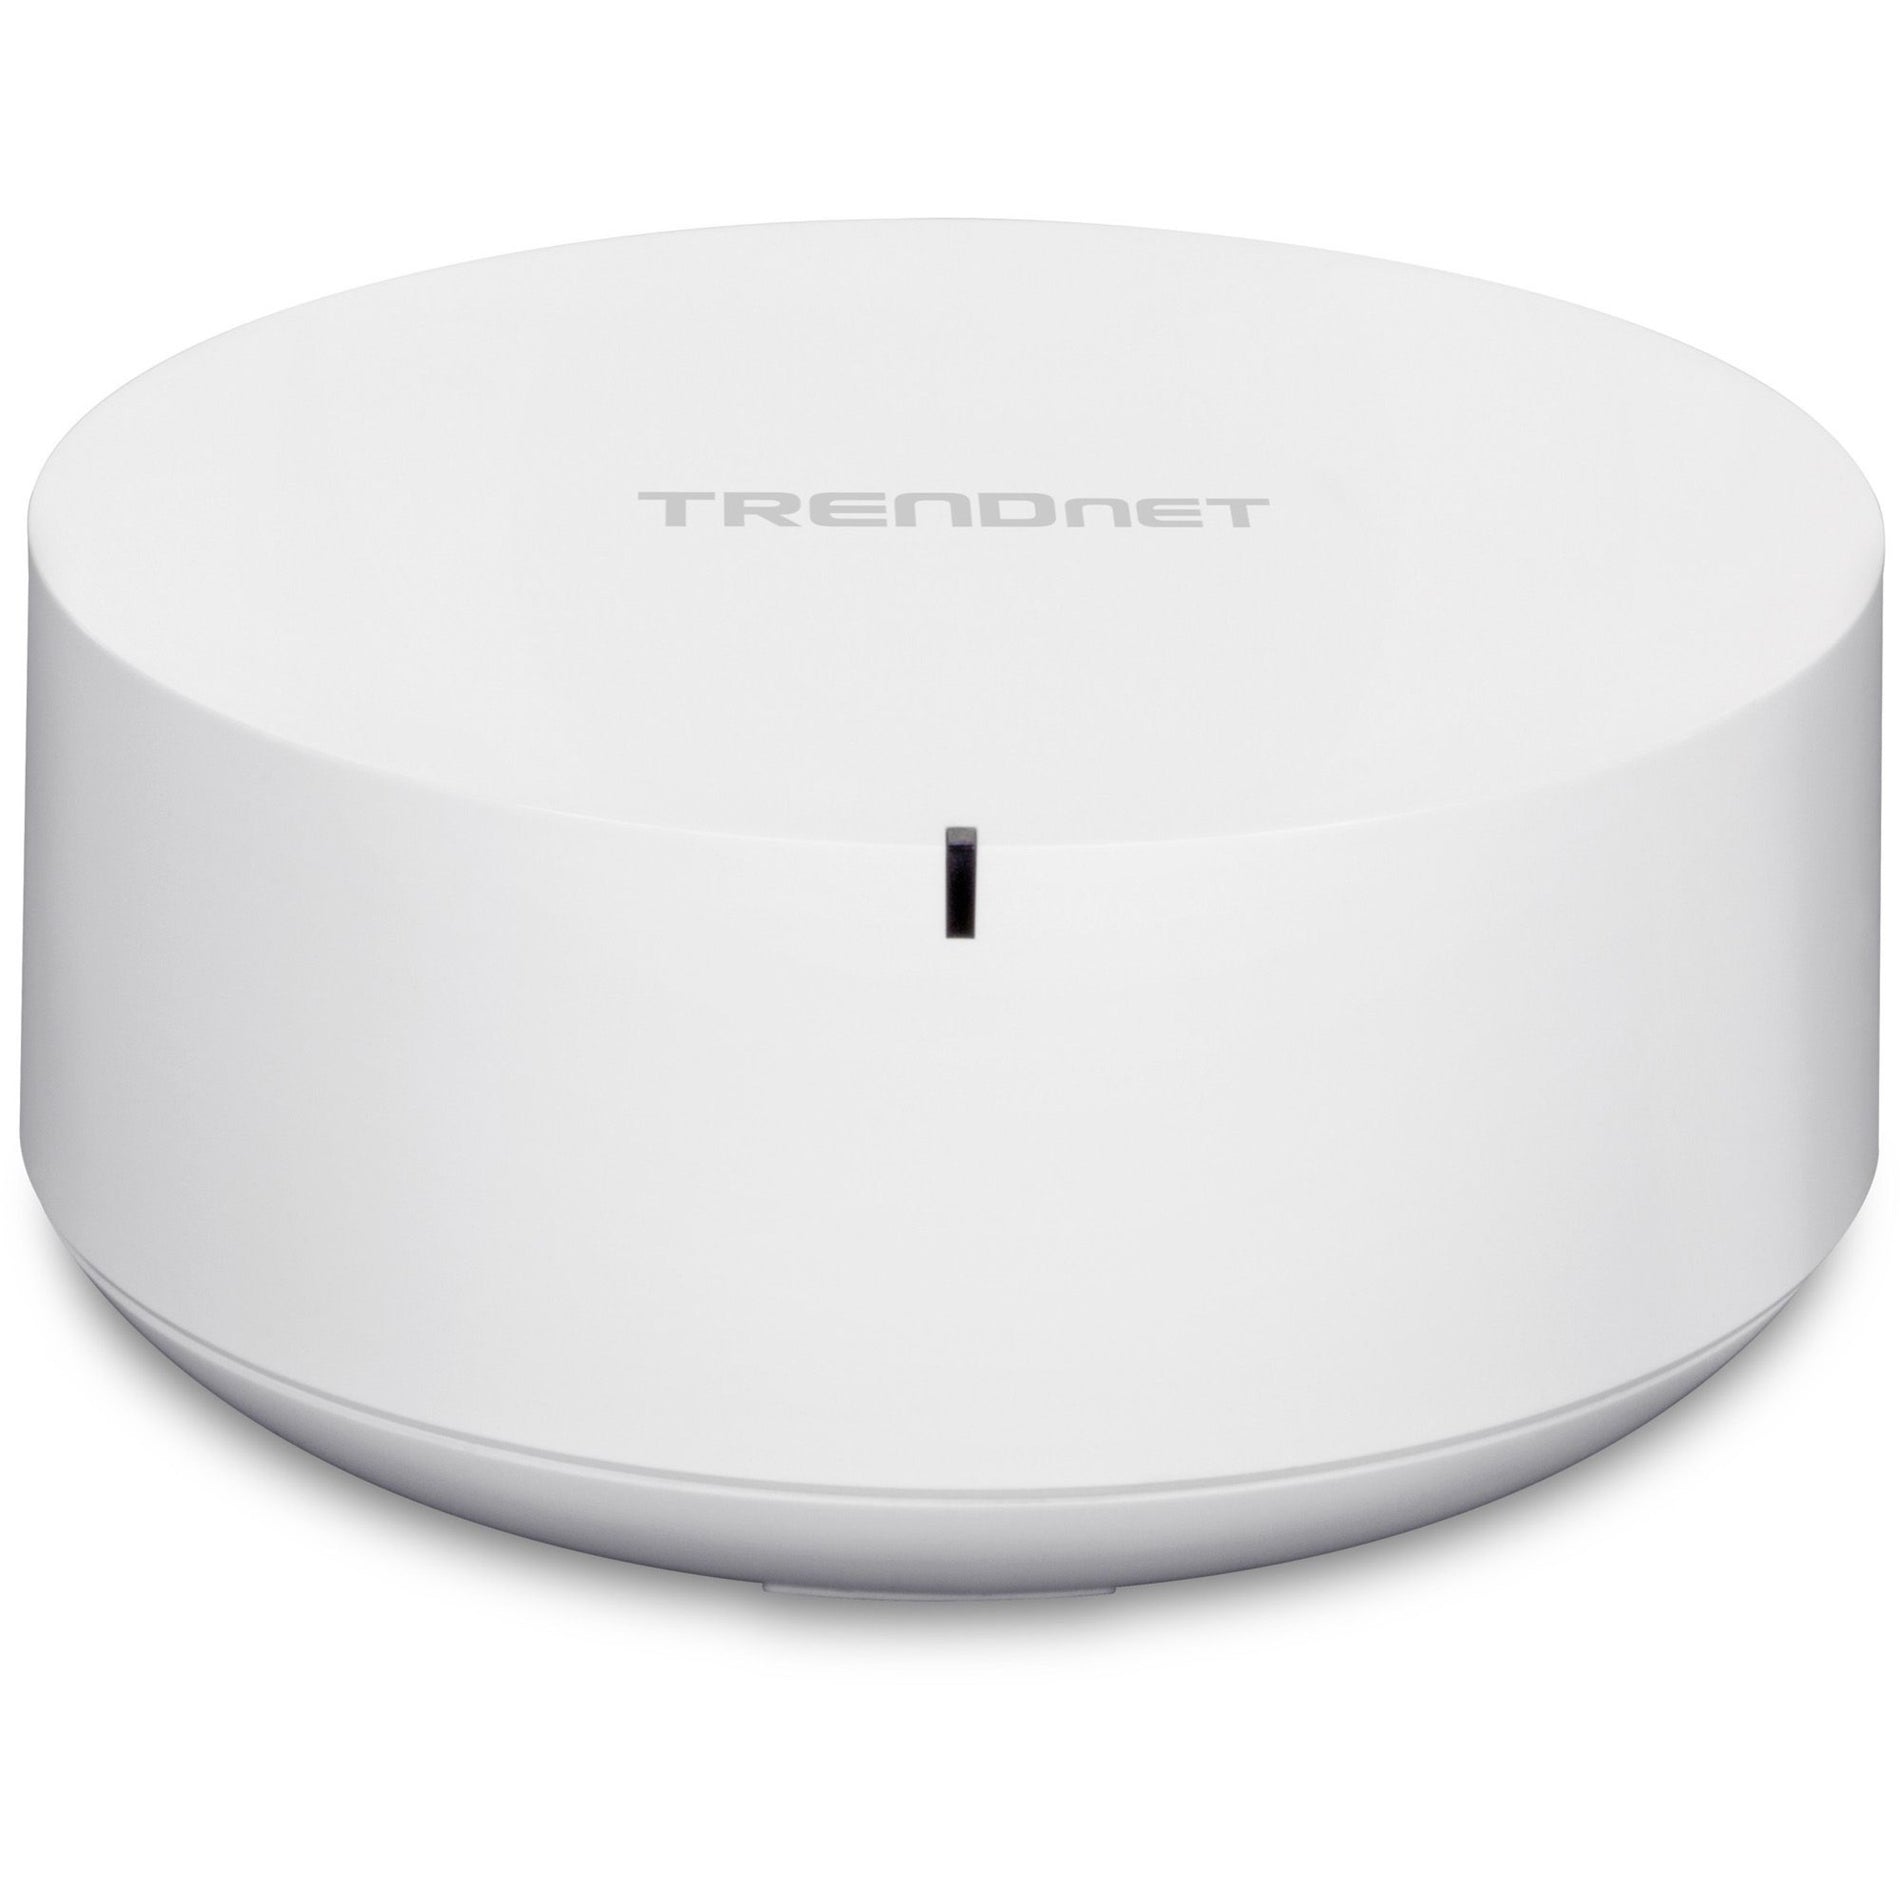 TRENDnet TEW-830MDR2K AC2200 WiFi Mesh Router System(2 pack), Gigabit Ethernet, 3 Year Warranty